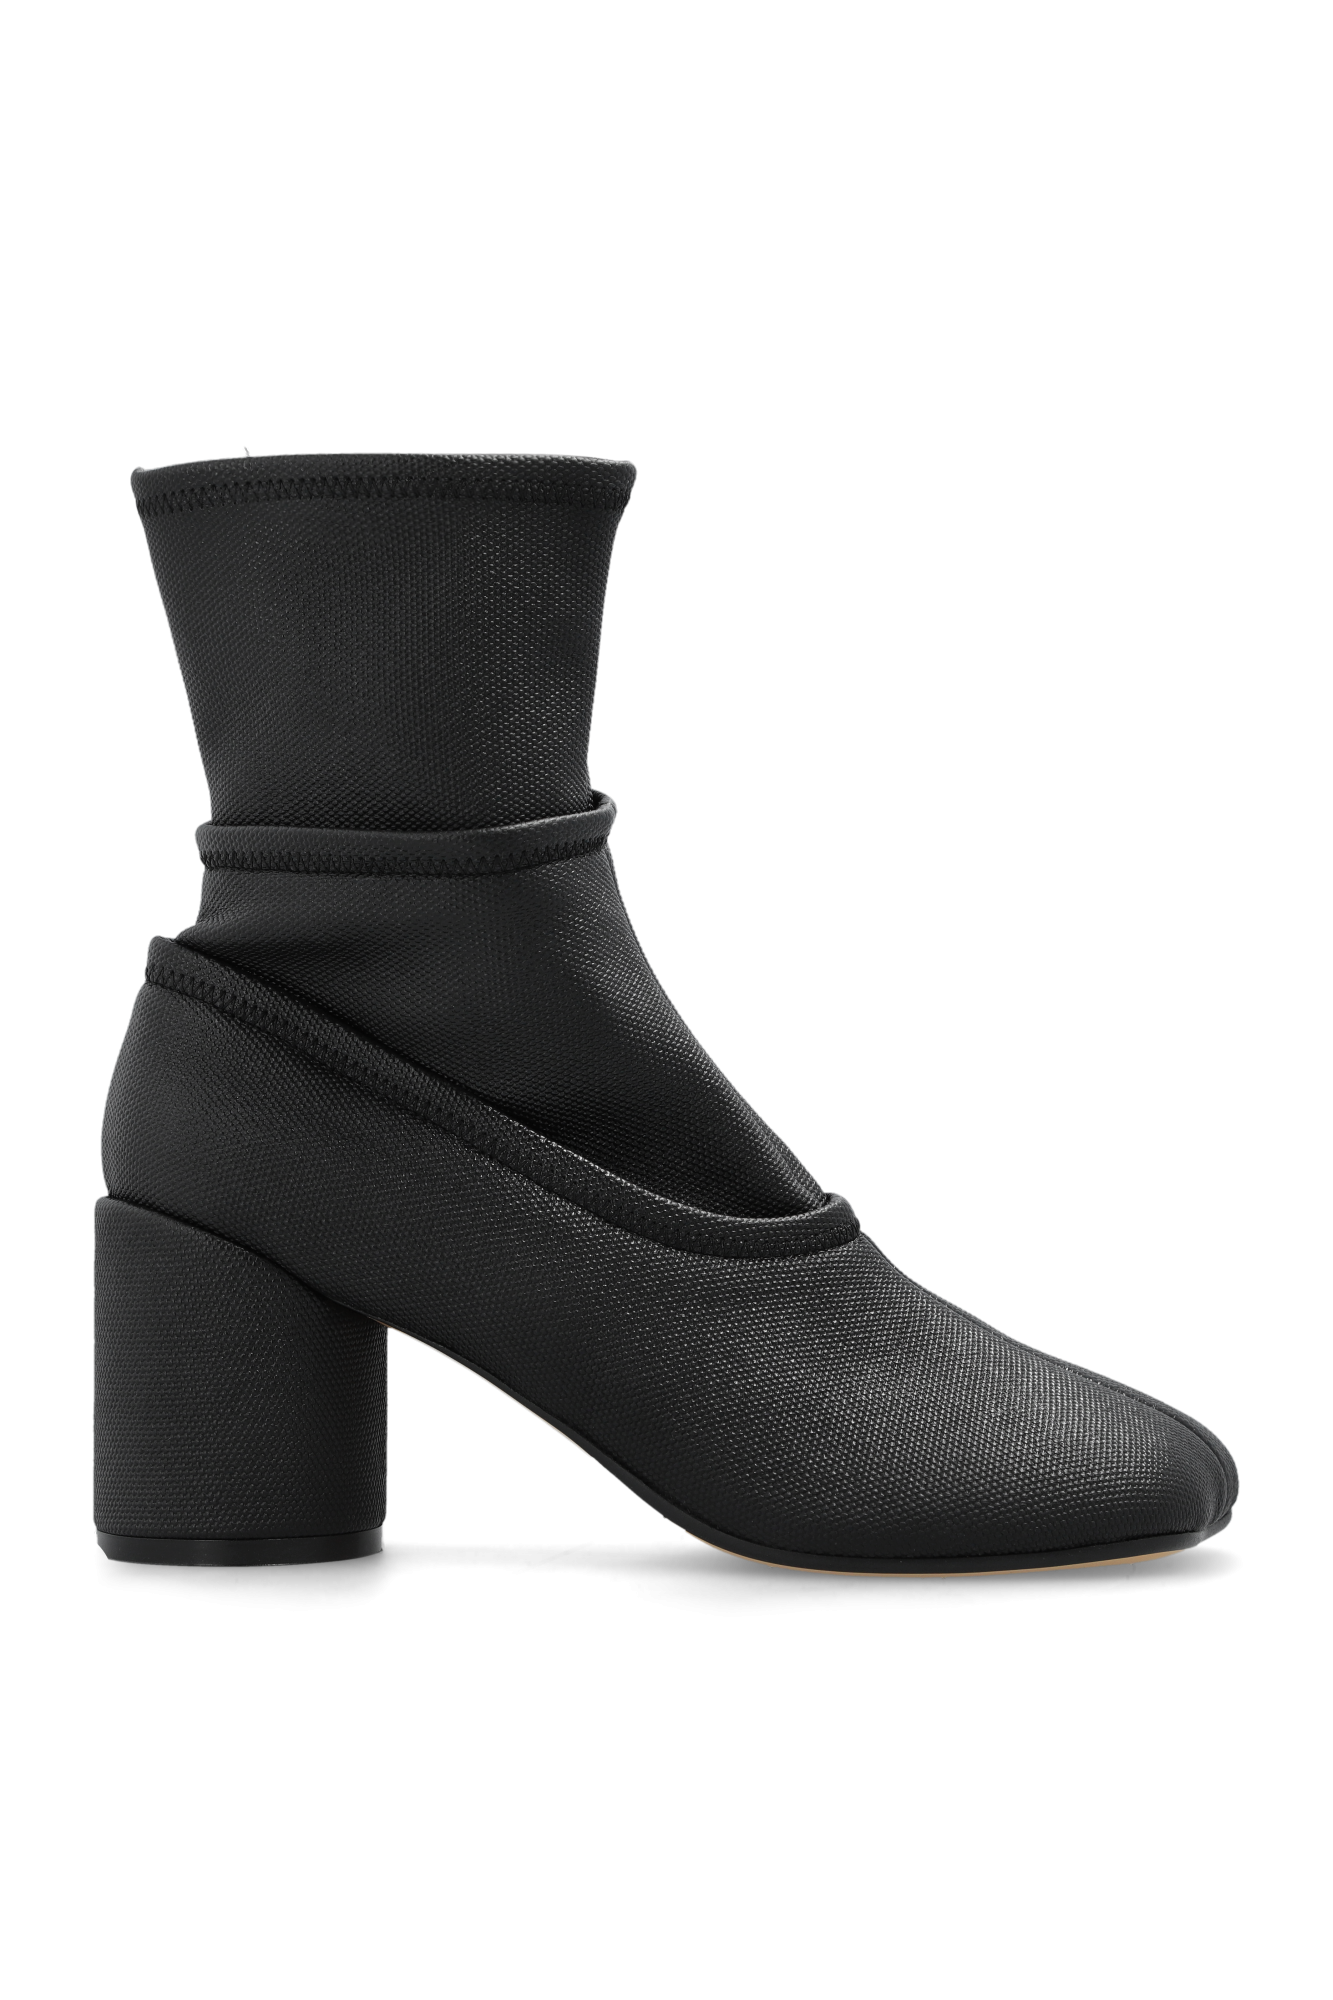 Black 'Anatomic' heeled ankle boots MM6 Maison Margiela - These